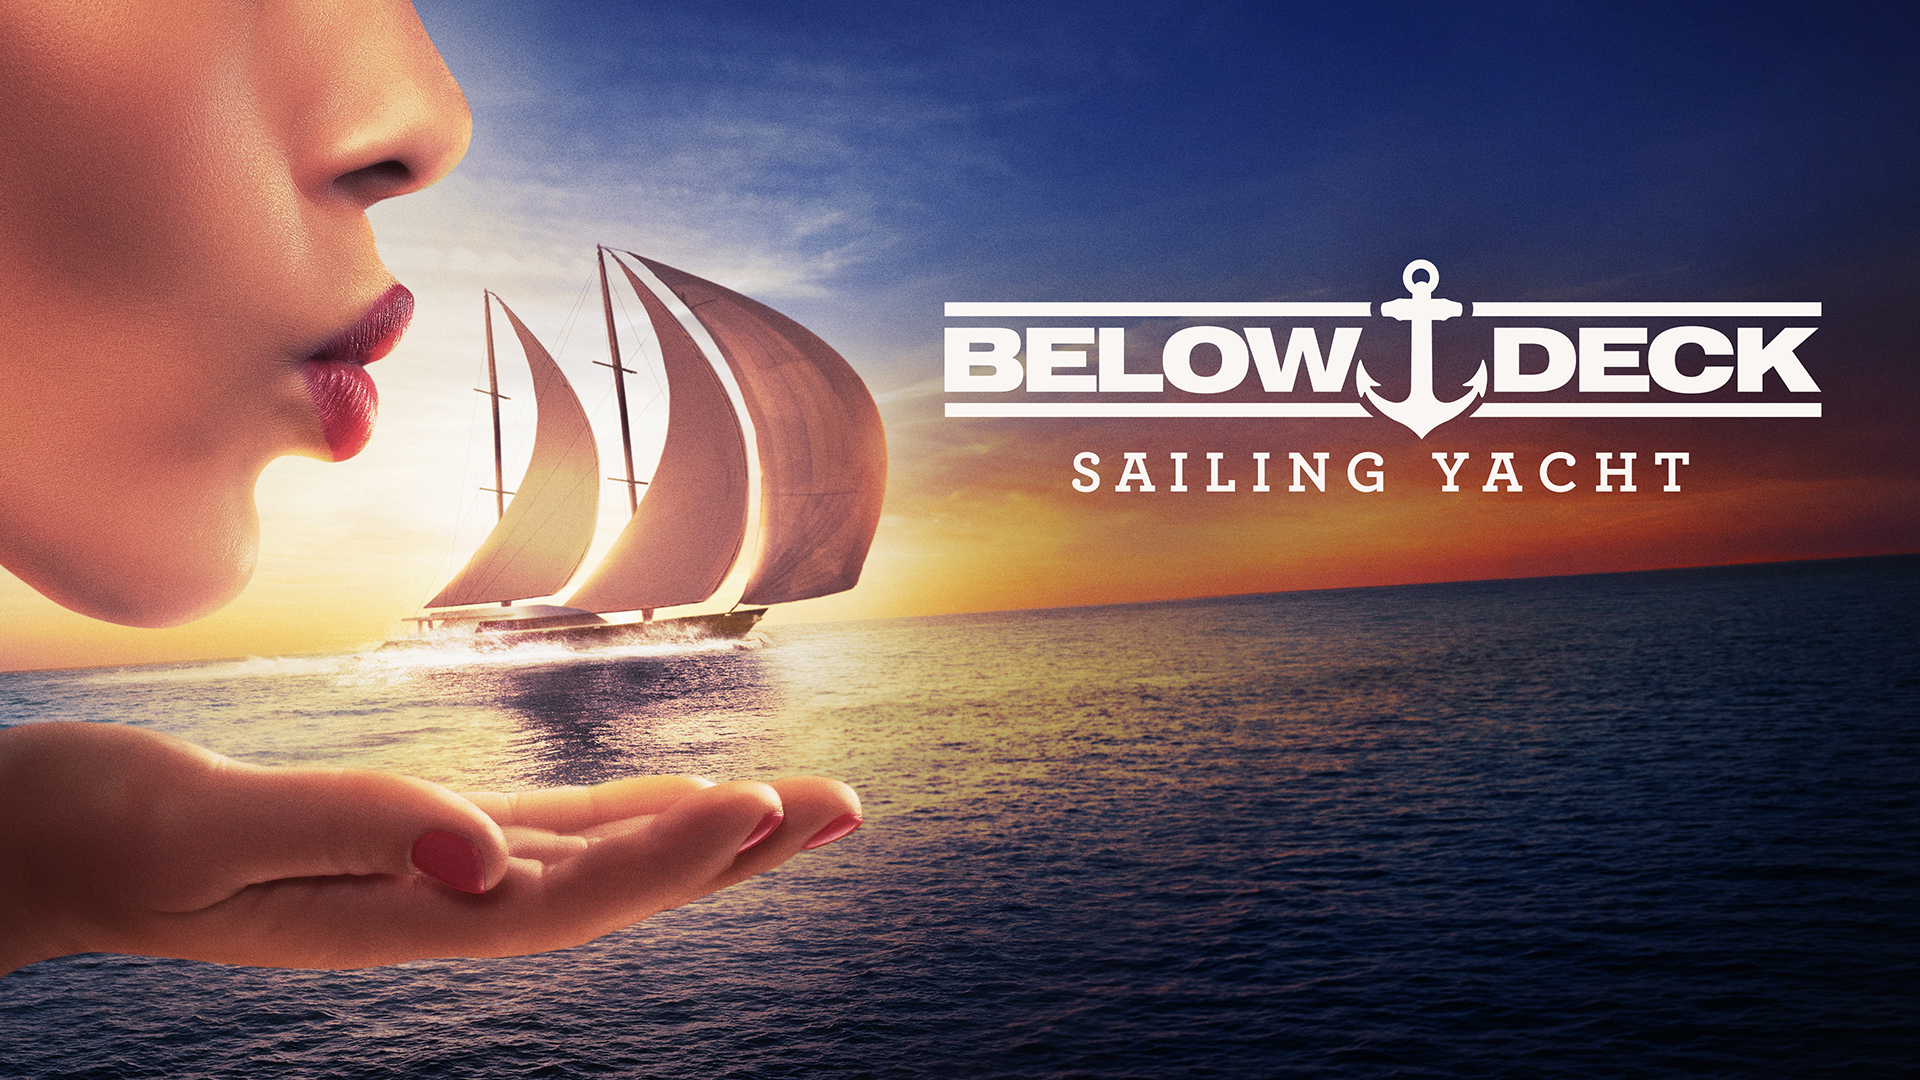 'Below Deck Sailing Yacht' - New Season April 10